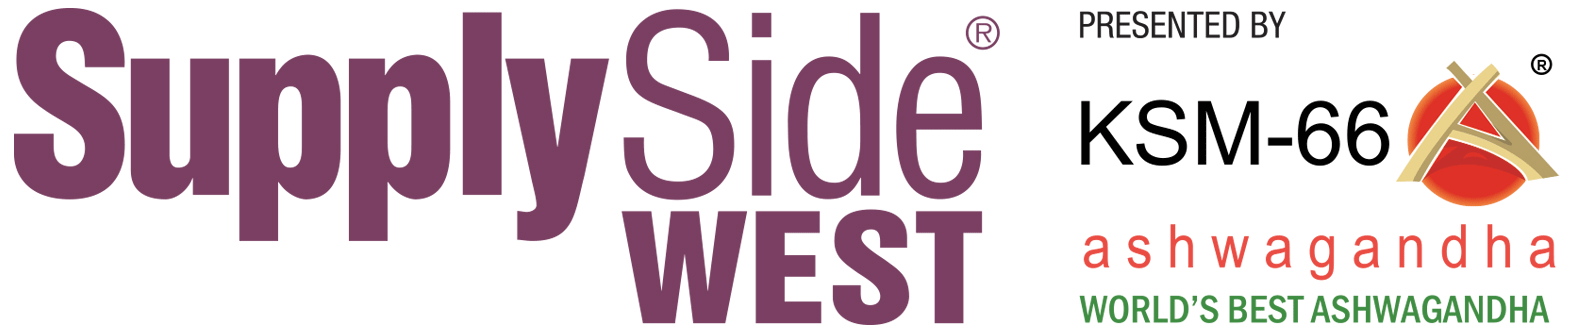 ssw-logo-png